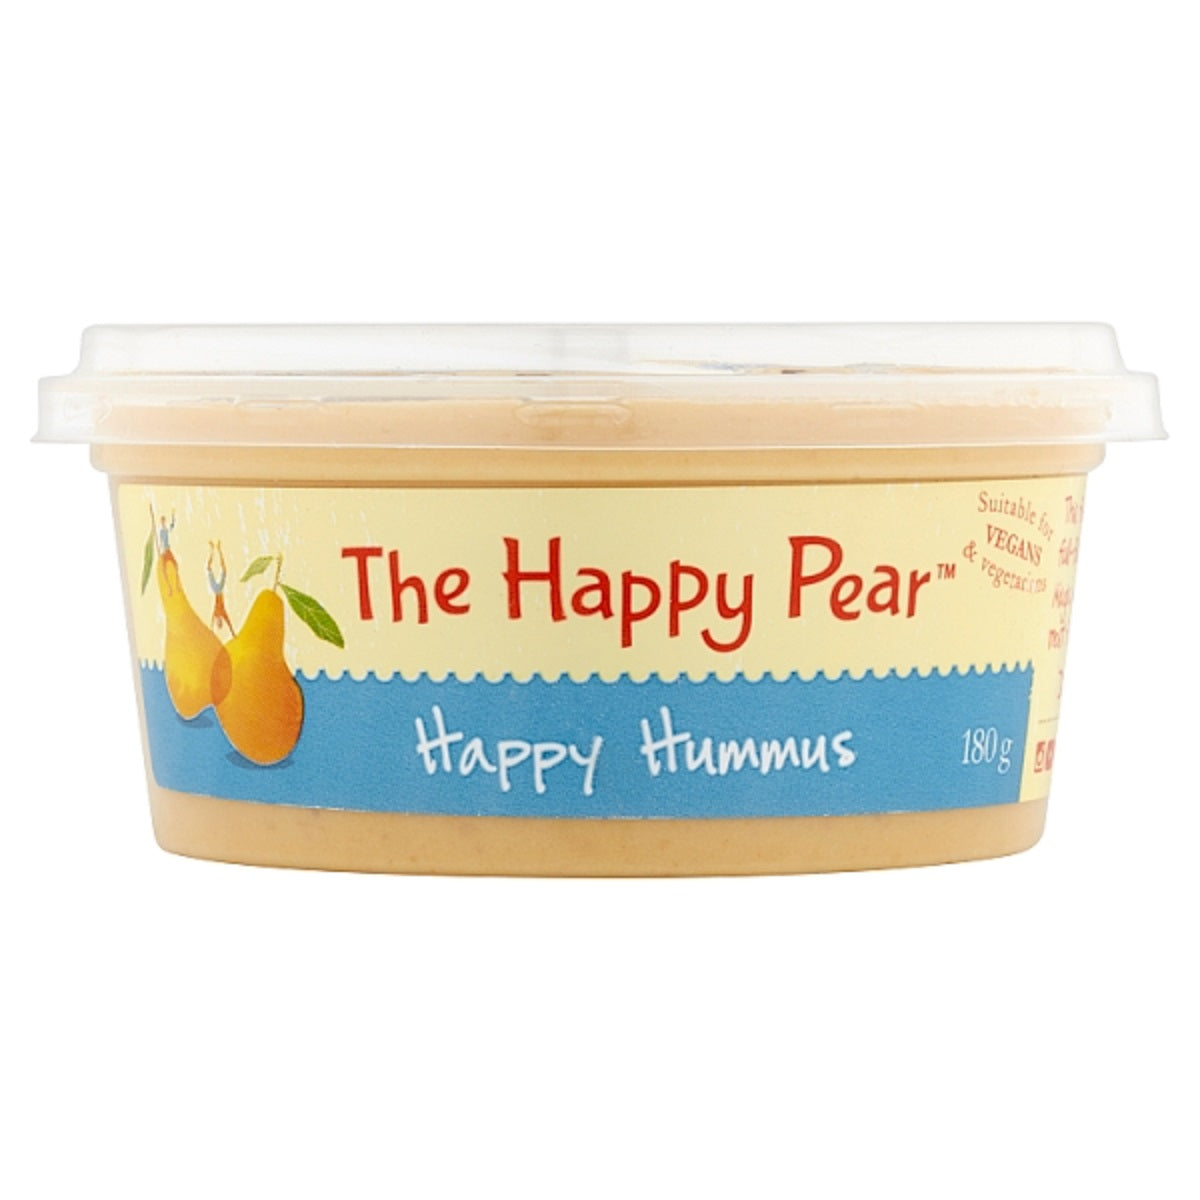 The Happy Pear Happy Hummus 150g